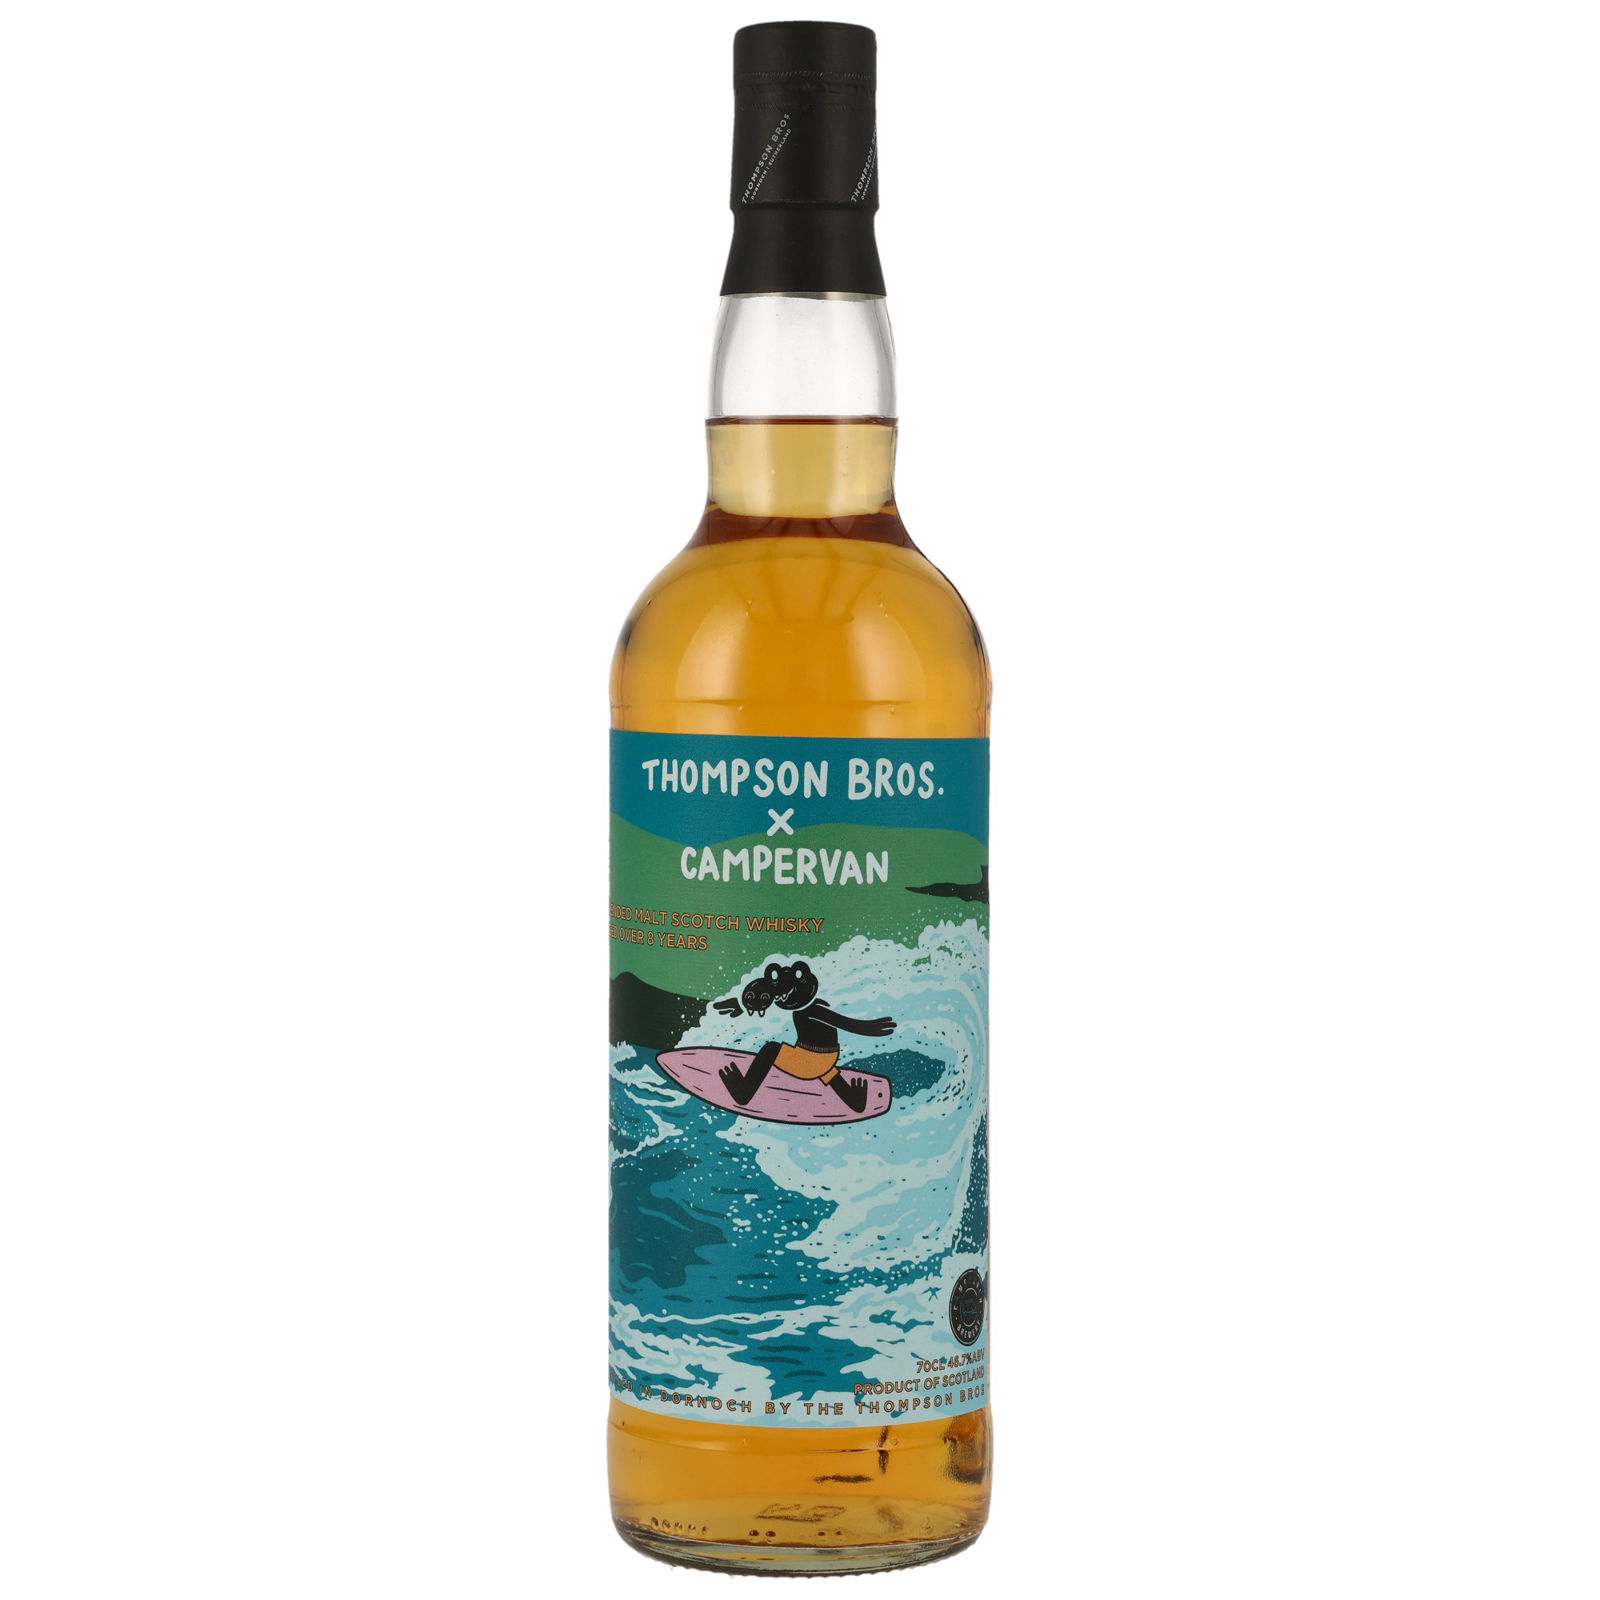 Campervan 8 Jahre Blended Malt Scotch (Thompson Bros.)